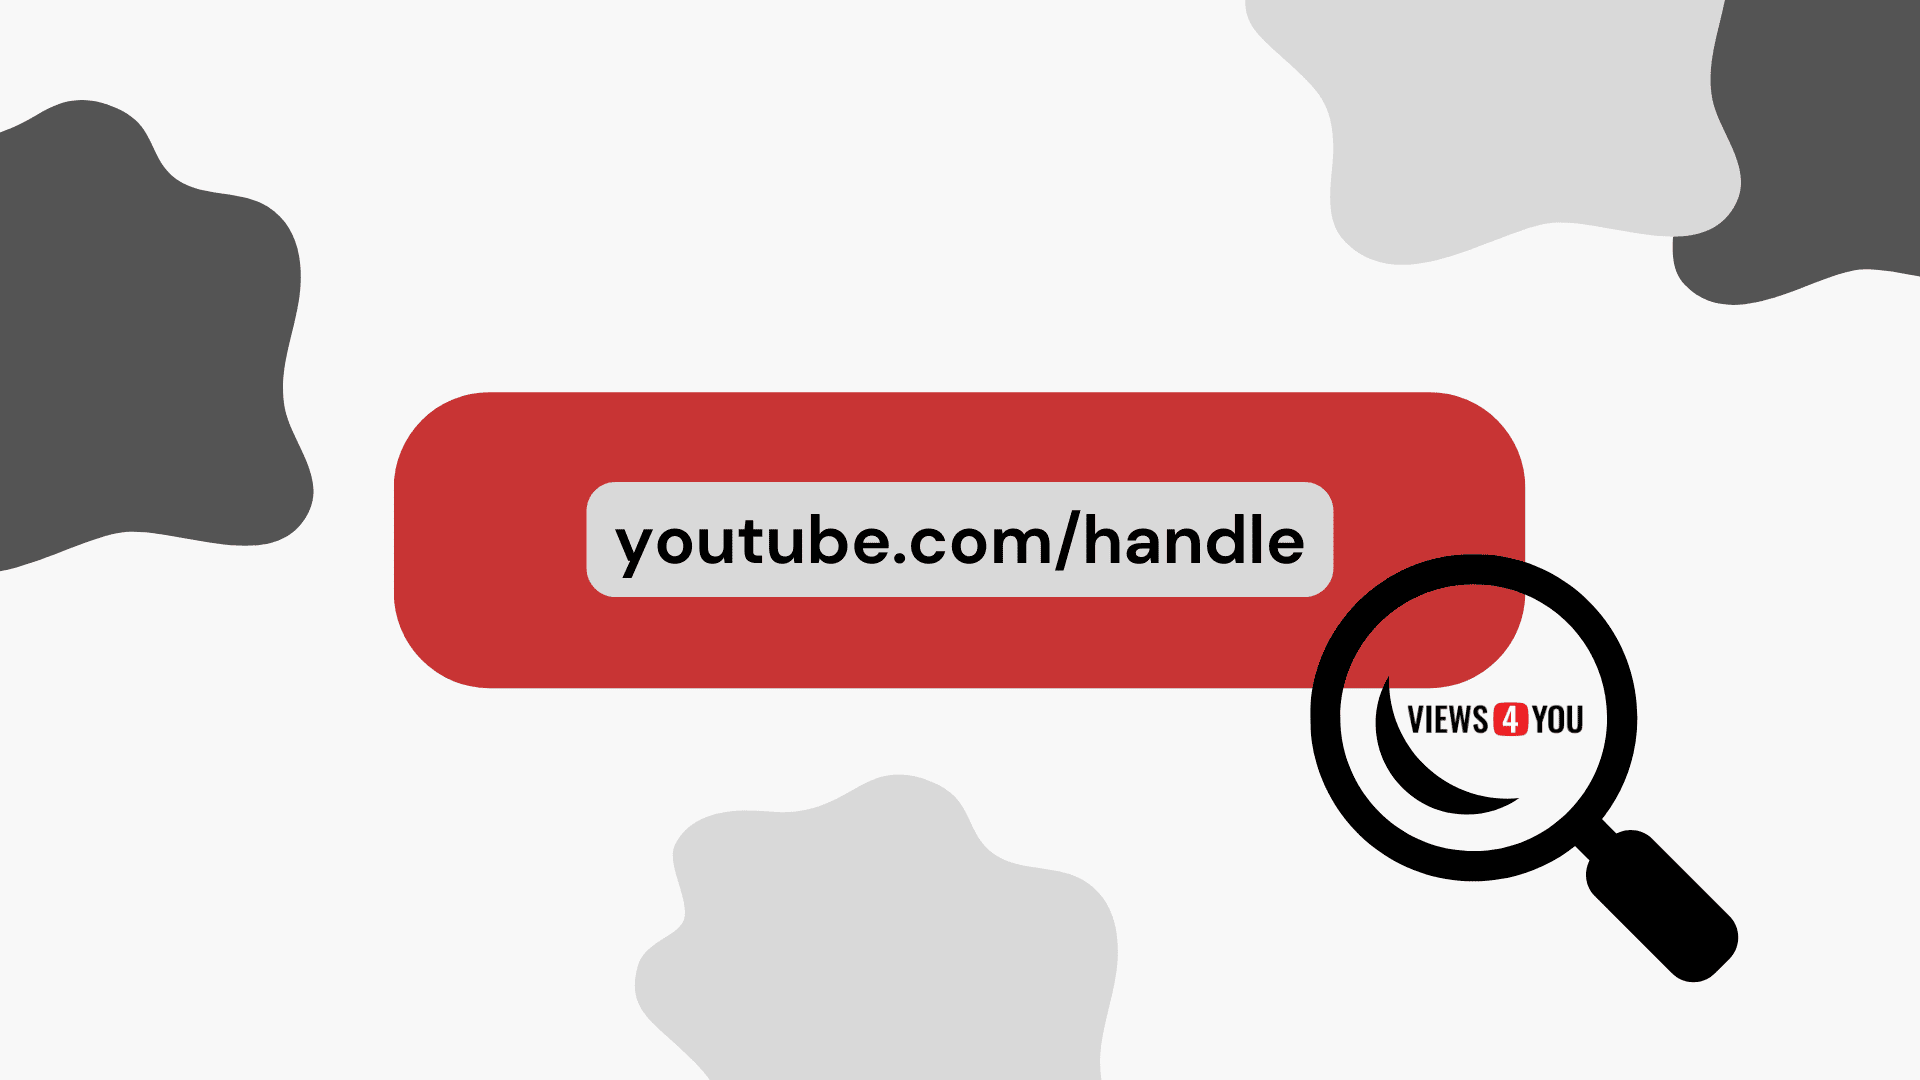 YouTube is launching handles!